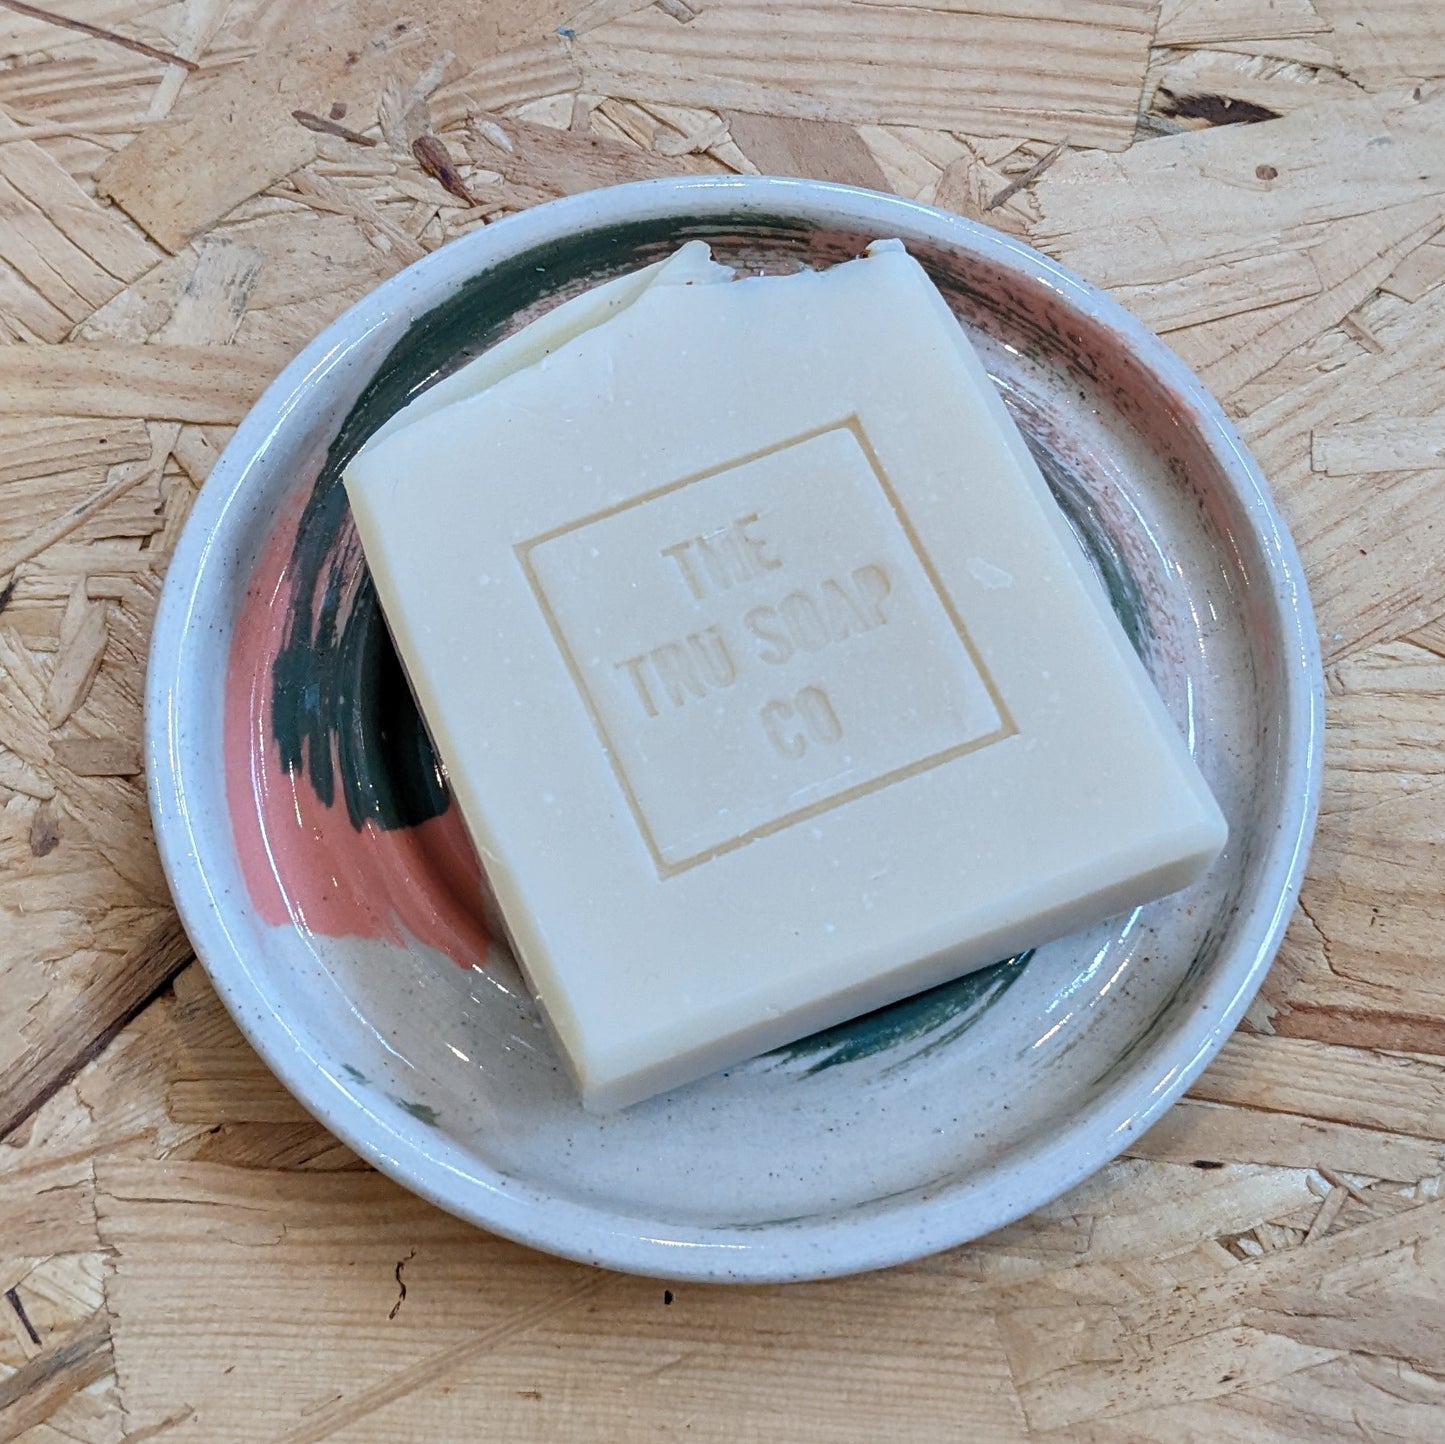 Screen printed Ceramic Soap Dishes